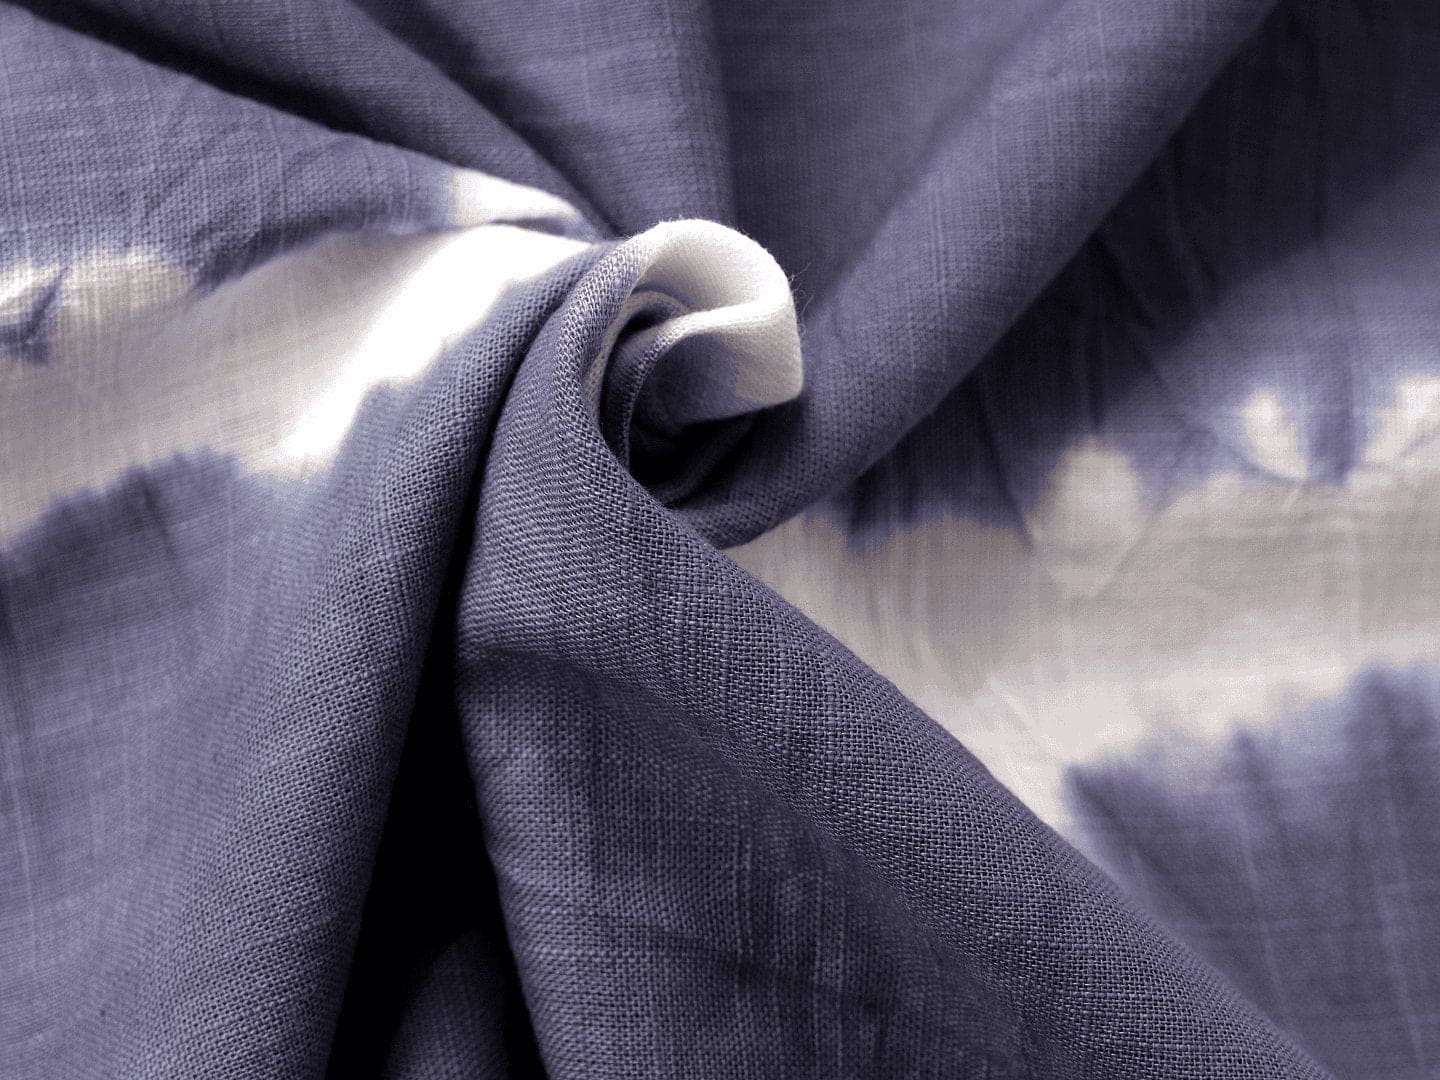 Indigo Hand Tie Dye Fabric - Charkha TalesIndigo Hand Tie Dye Fabric